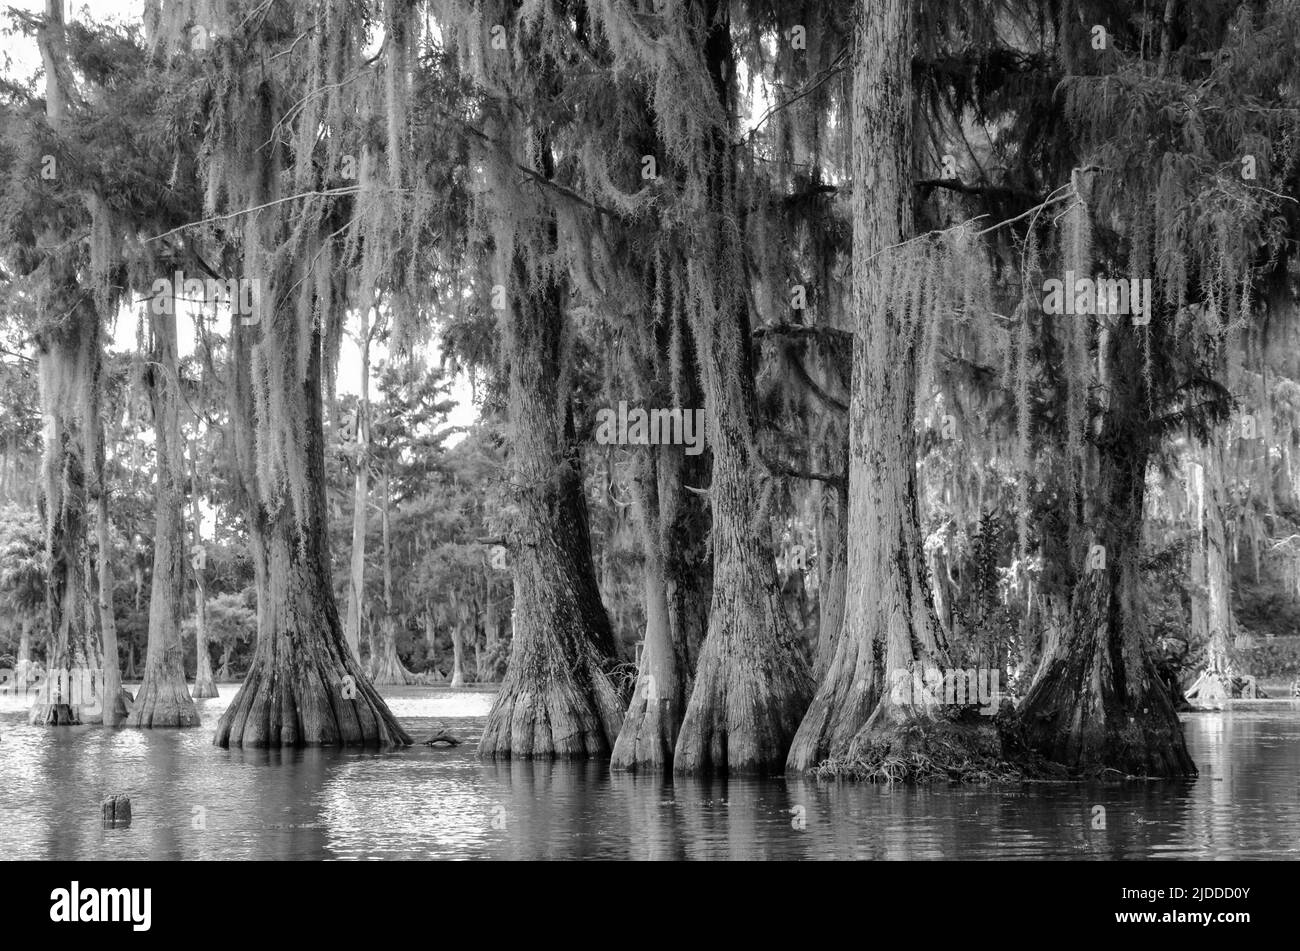 An artsy b&w photo of cypress trees draped in Spanish moss at Merritt's Mill Pond, Marianna, Florida, USA Stock Photo